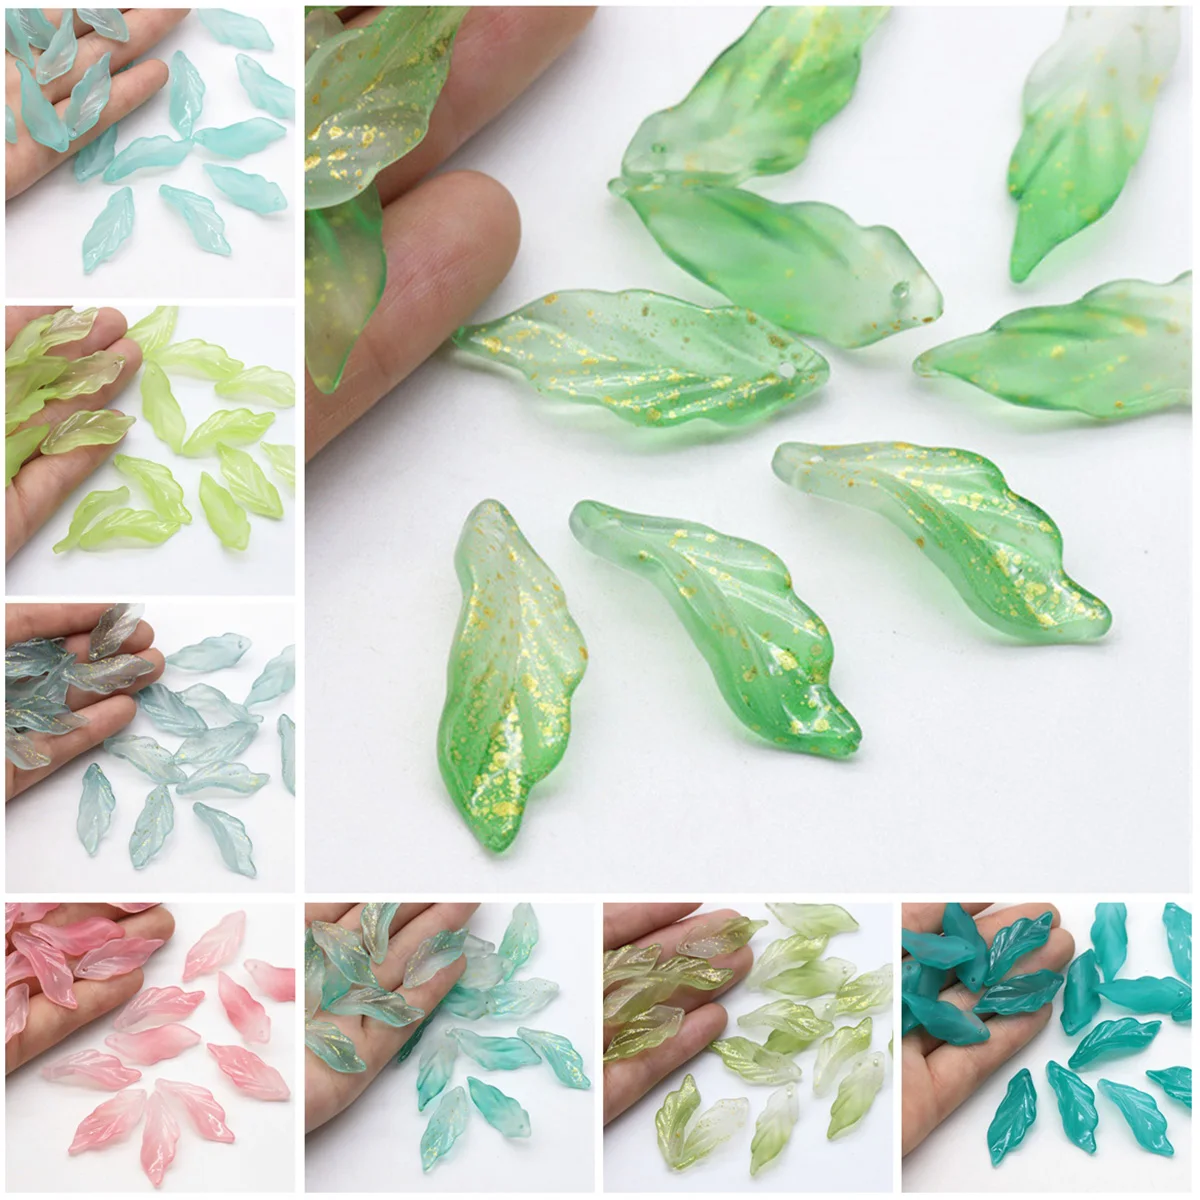 10pcs Long Leaf Shape Petal 34x12mm Handmade Lampwork Crystal Glass Loose Pendants Beads for Jewelry Making DIY Crafts Findings